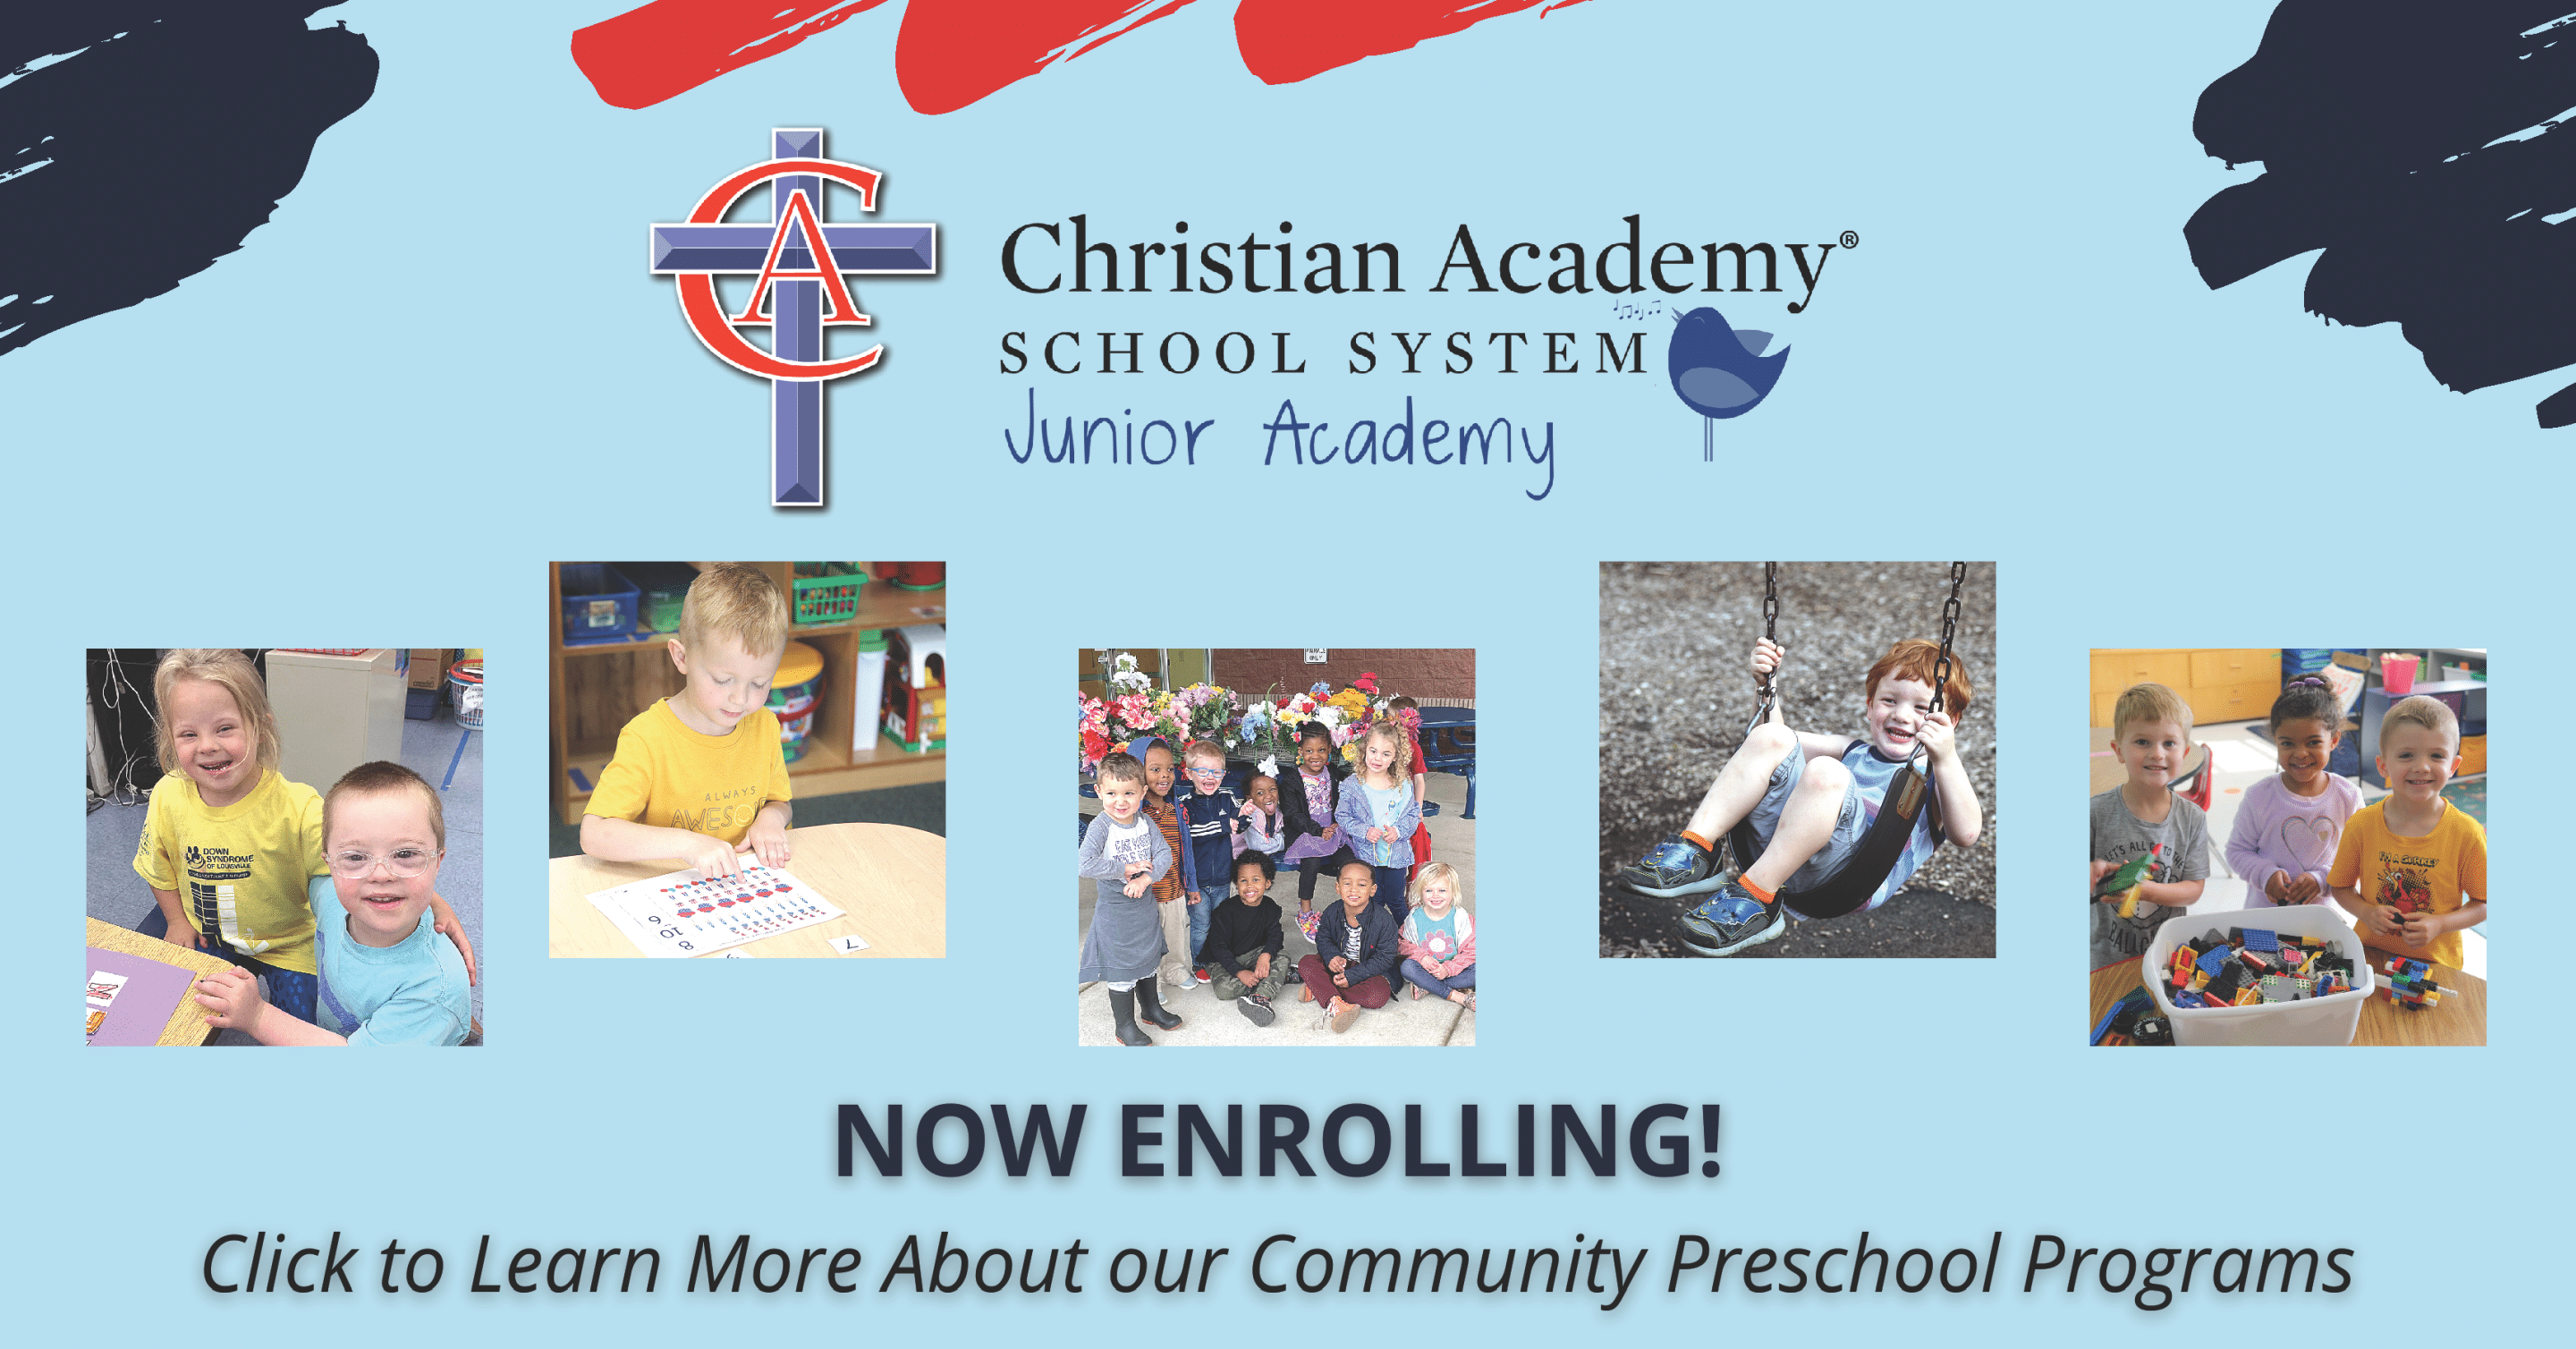 Christian Academy School System | Junior Academy | Now Enrolling